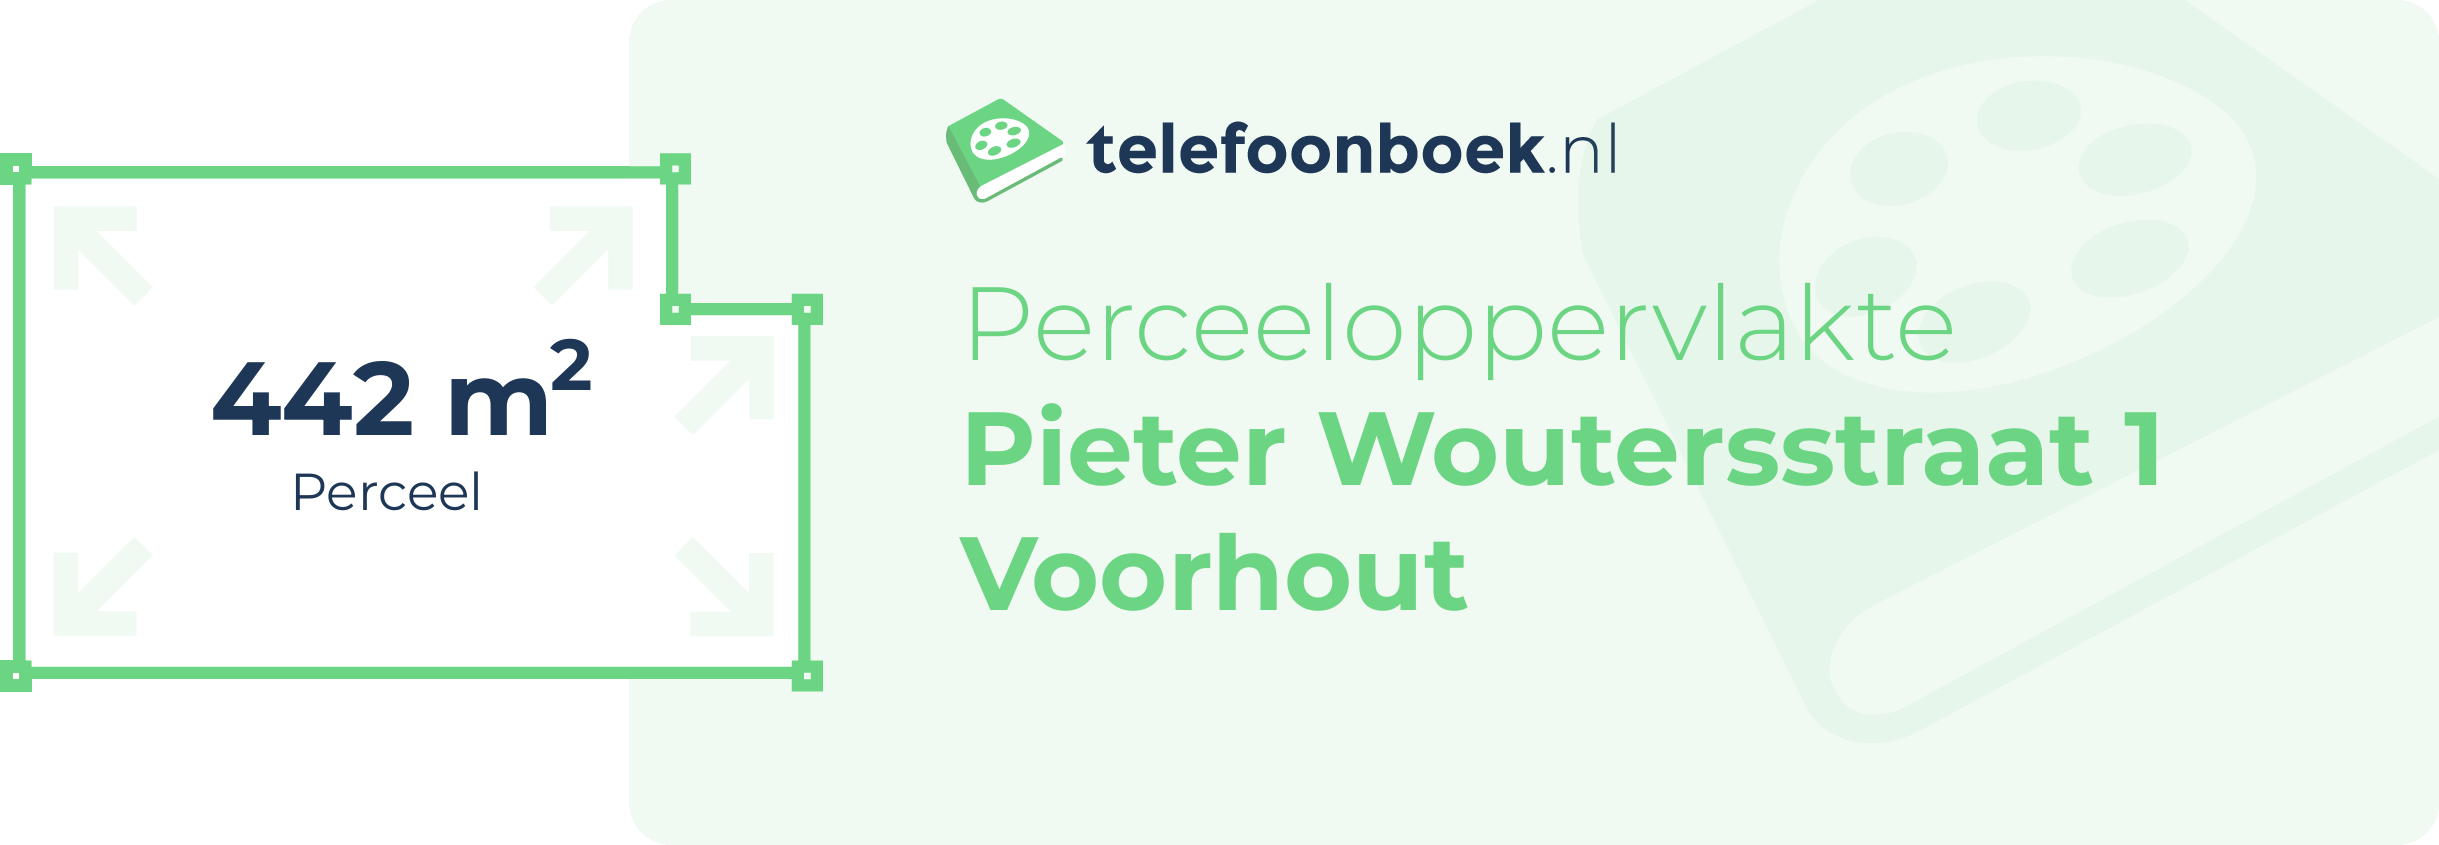 Perceeloppervlakte Pieter Woutersstraat 1 Voorhout